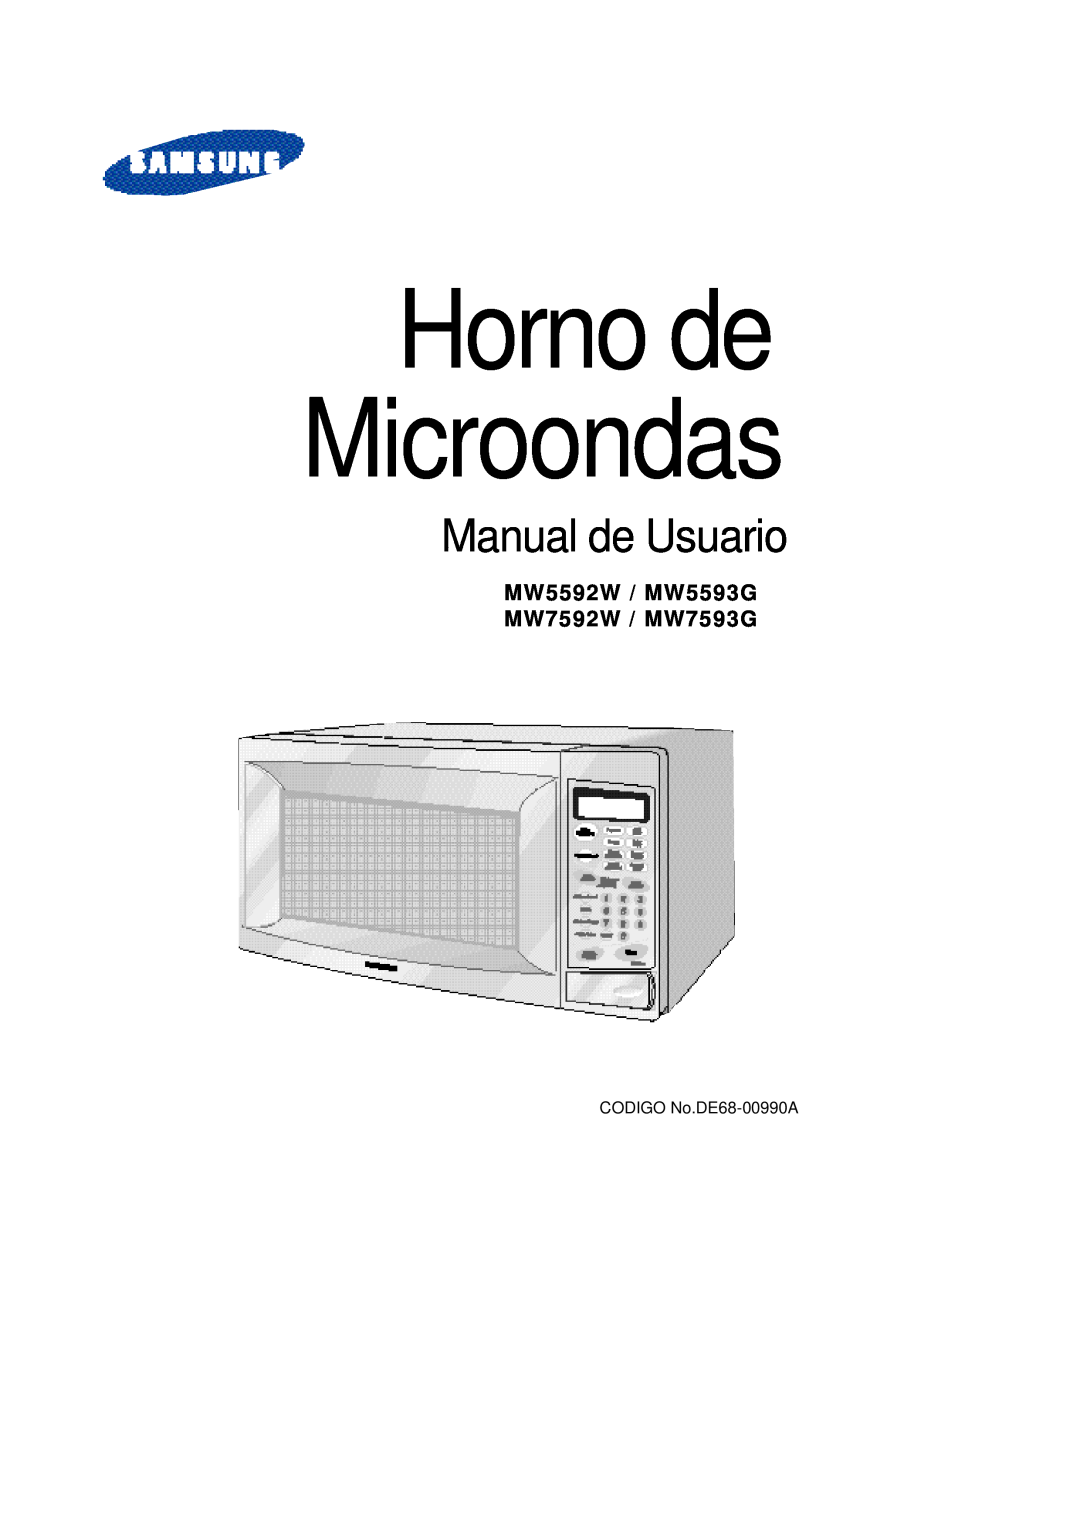 Samsung manual Manual de Usuario, Horno de Microondas, MW5592W / MW5593G MW7592W / MW7593G 